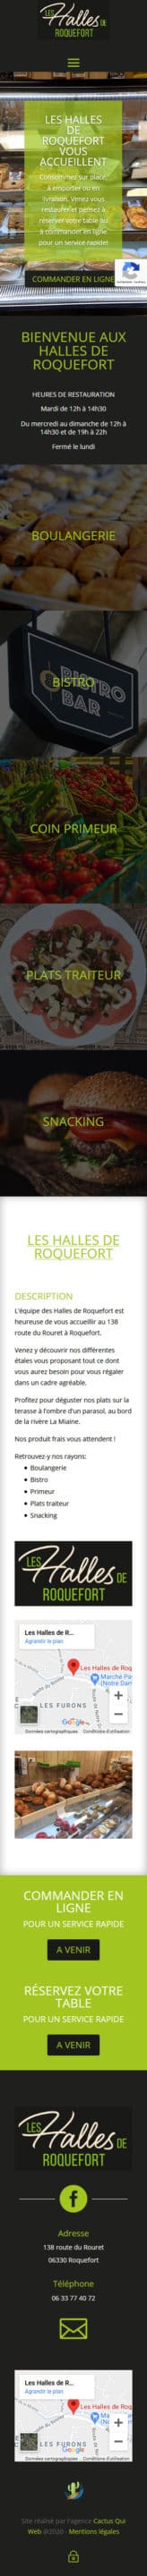 Accueil Smartphone Les Halles de Roquefort